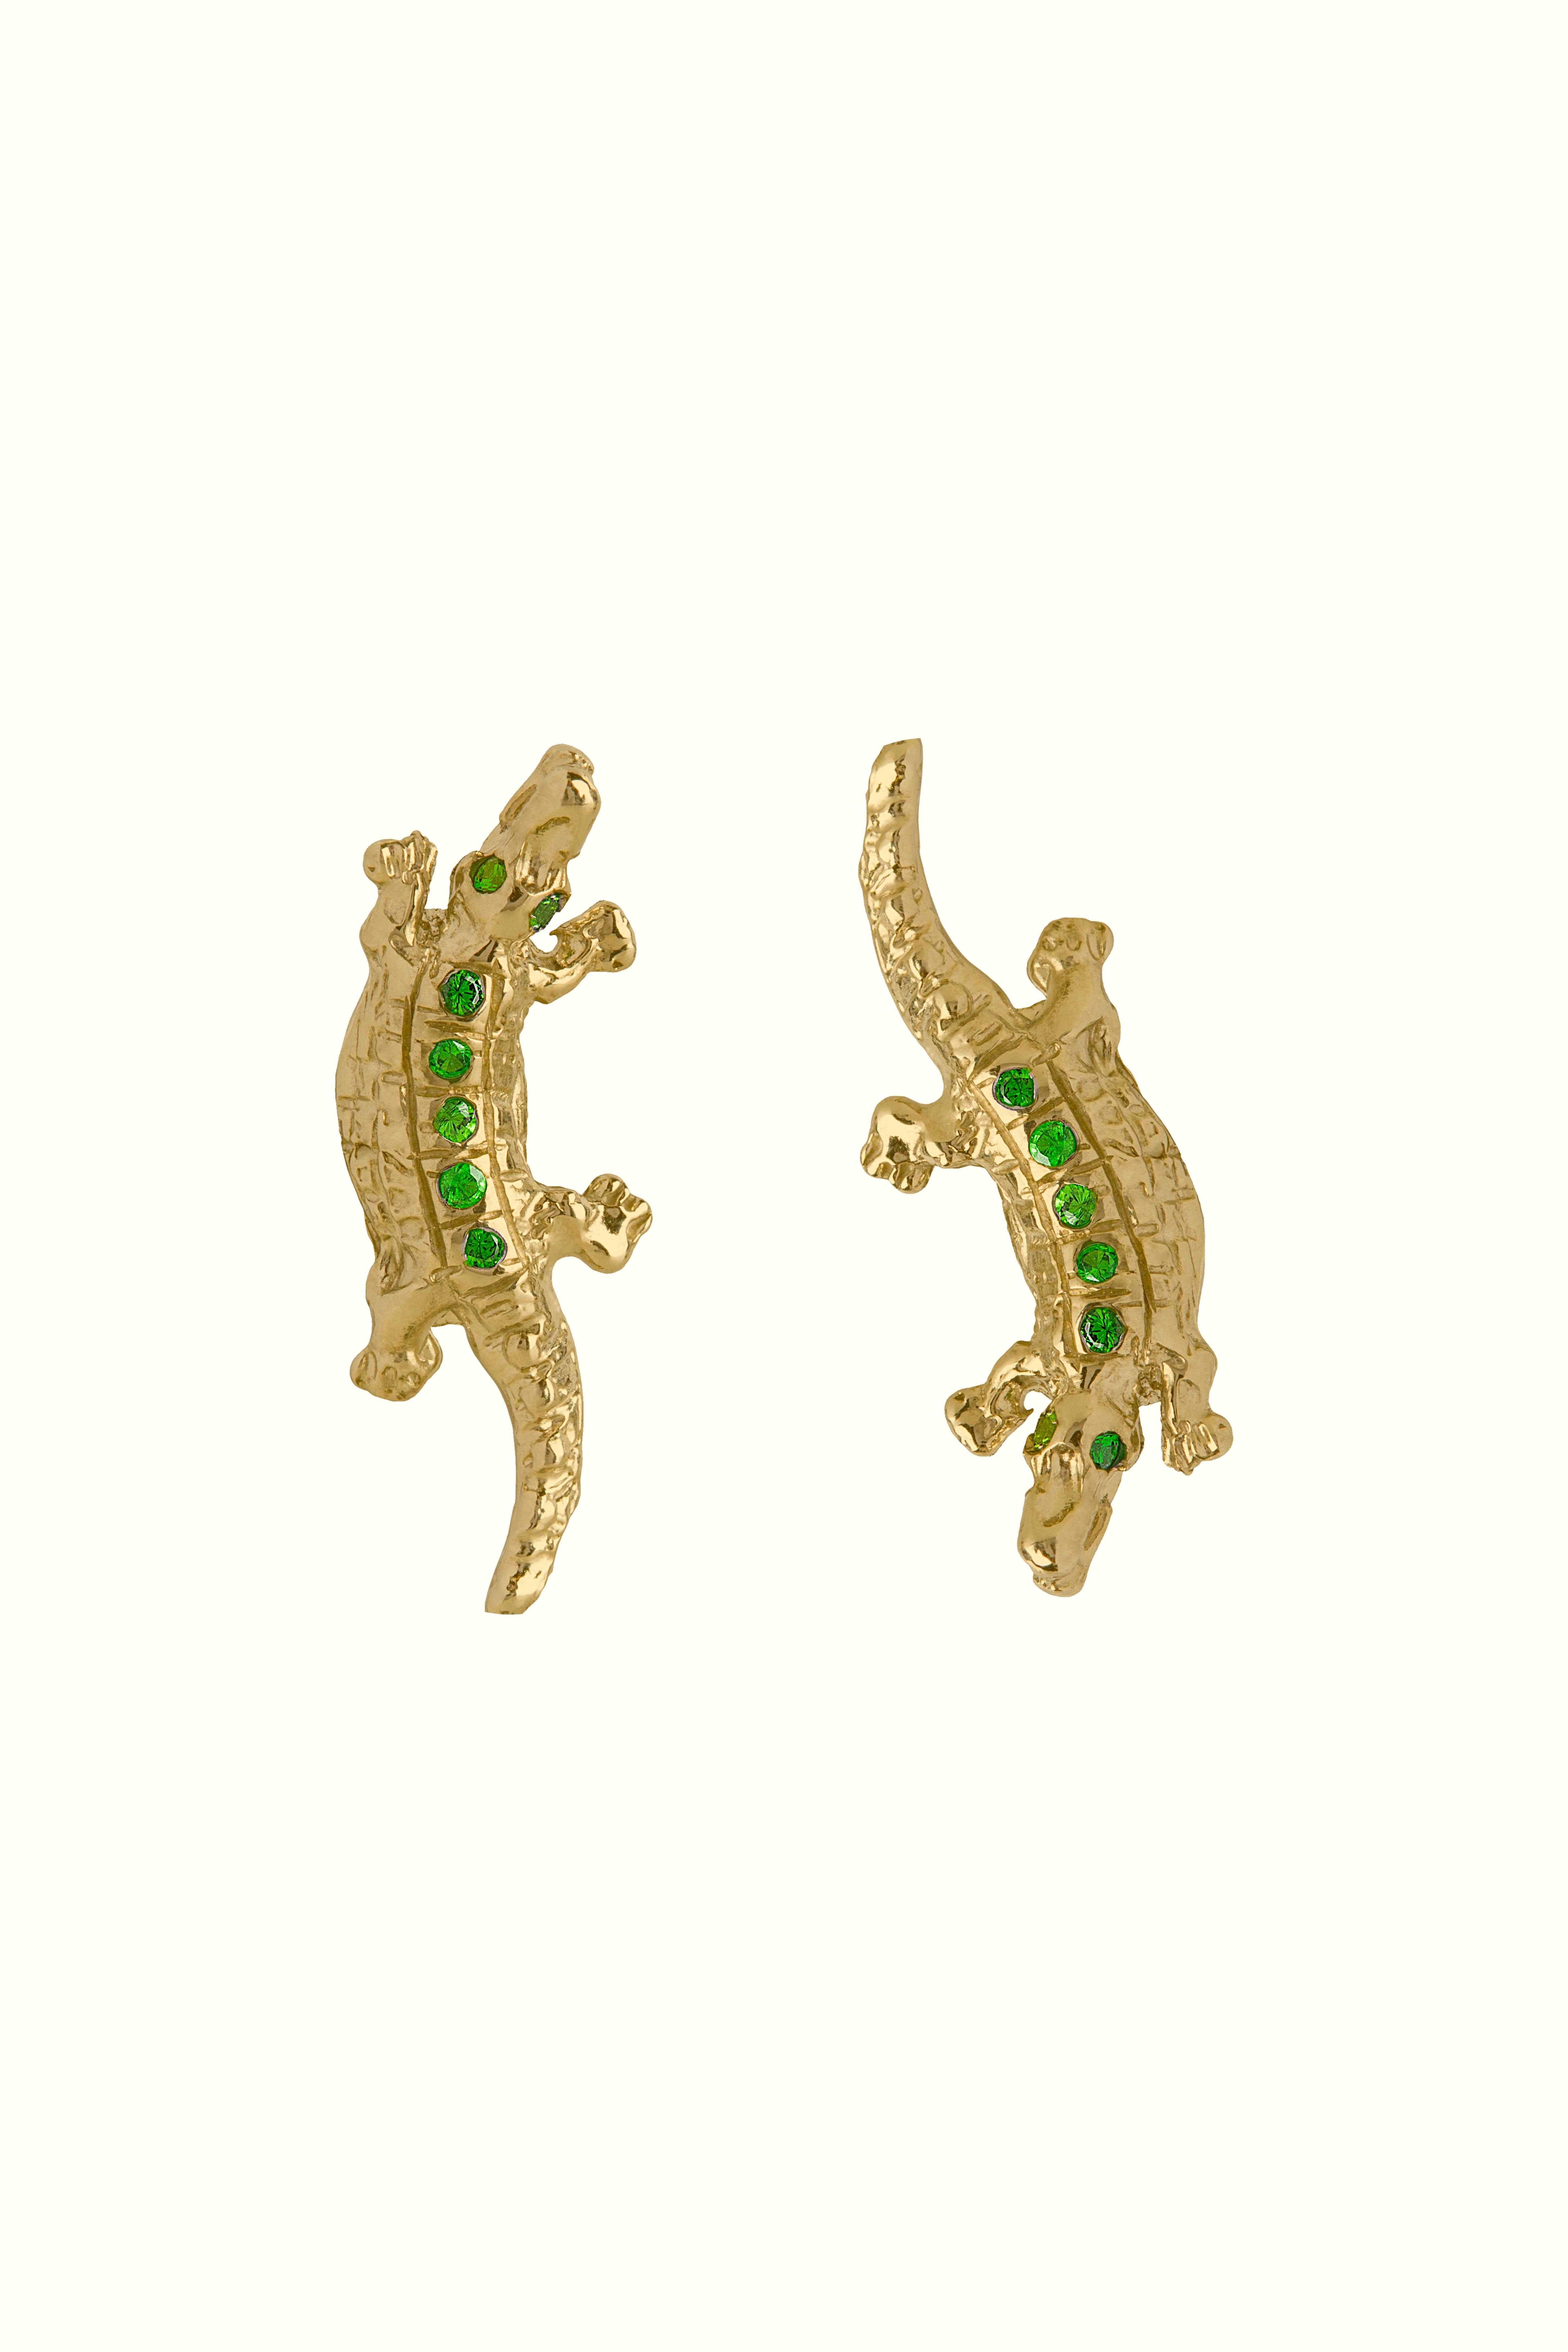 Rossella Ugolini Unisex Alligator Stud Earrings 18K Yellow Gold Emeralds  For Sale 1